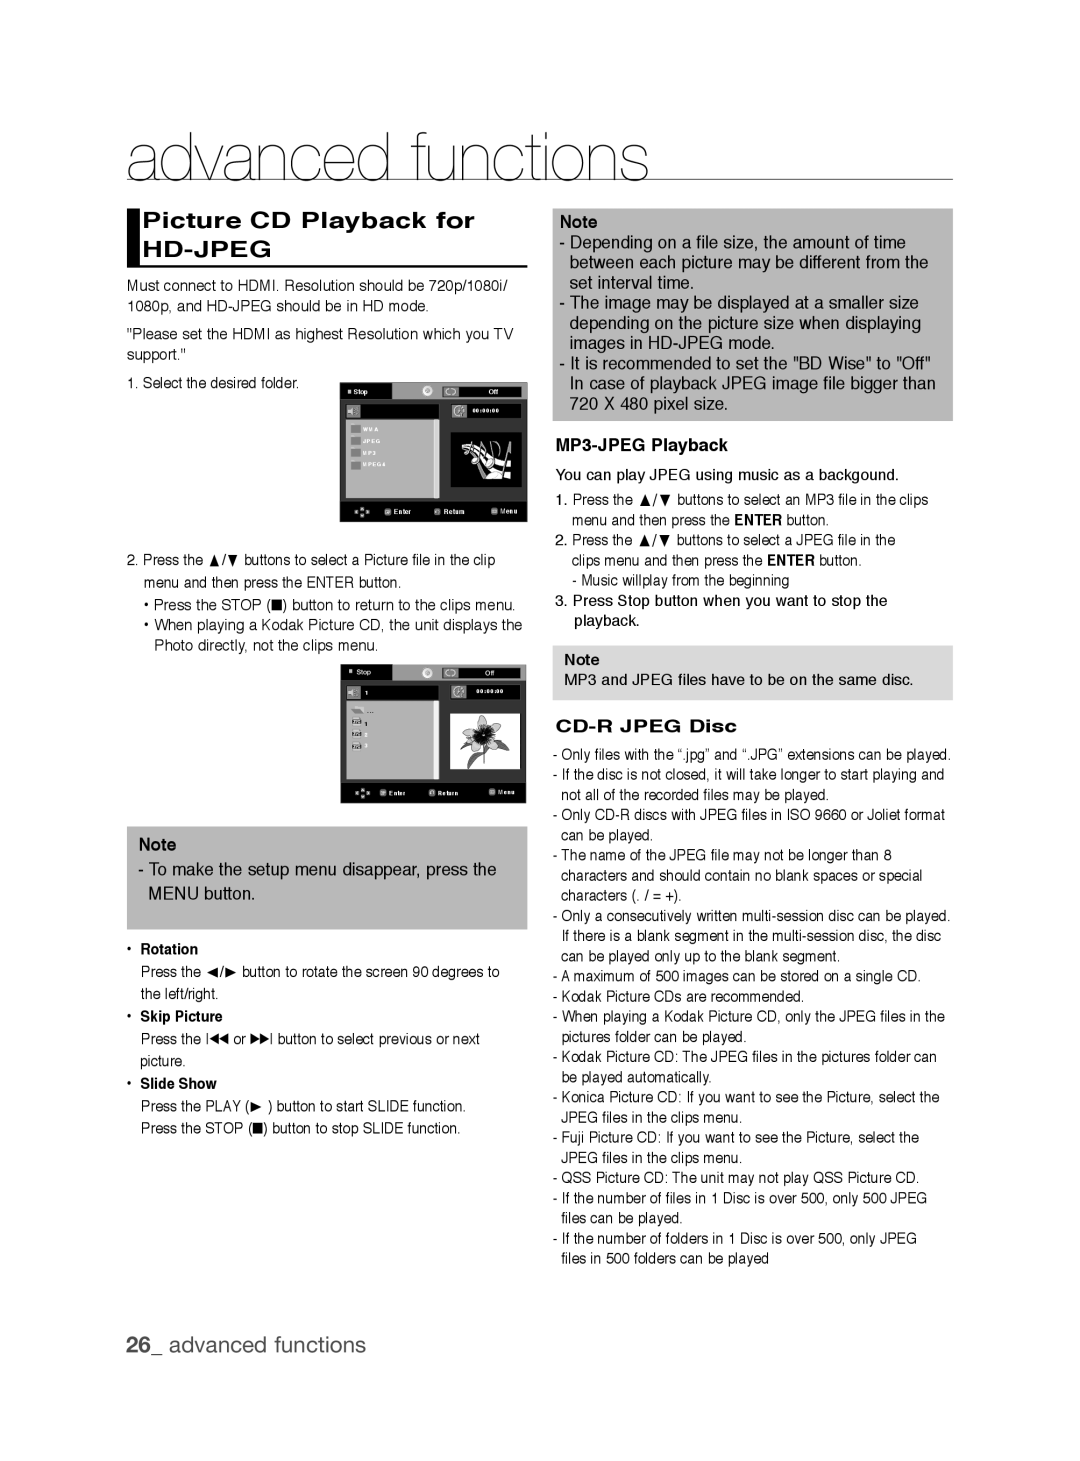 Samsung DVD-1080P9/SAH manual Picture CD Playback for HD-JPEG, advanced functions, MP3-JPEG Playback, CD-R JPEG Disc 